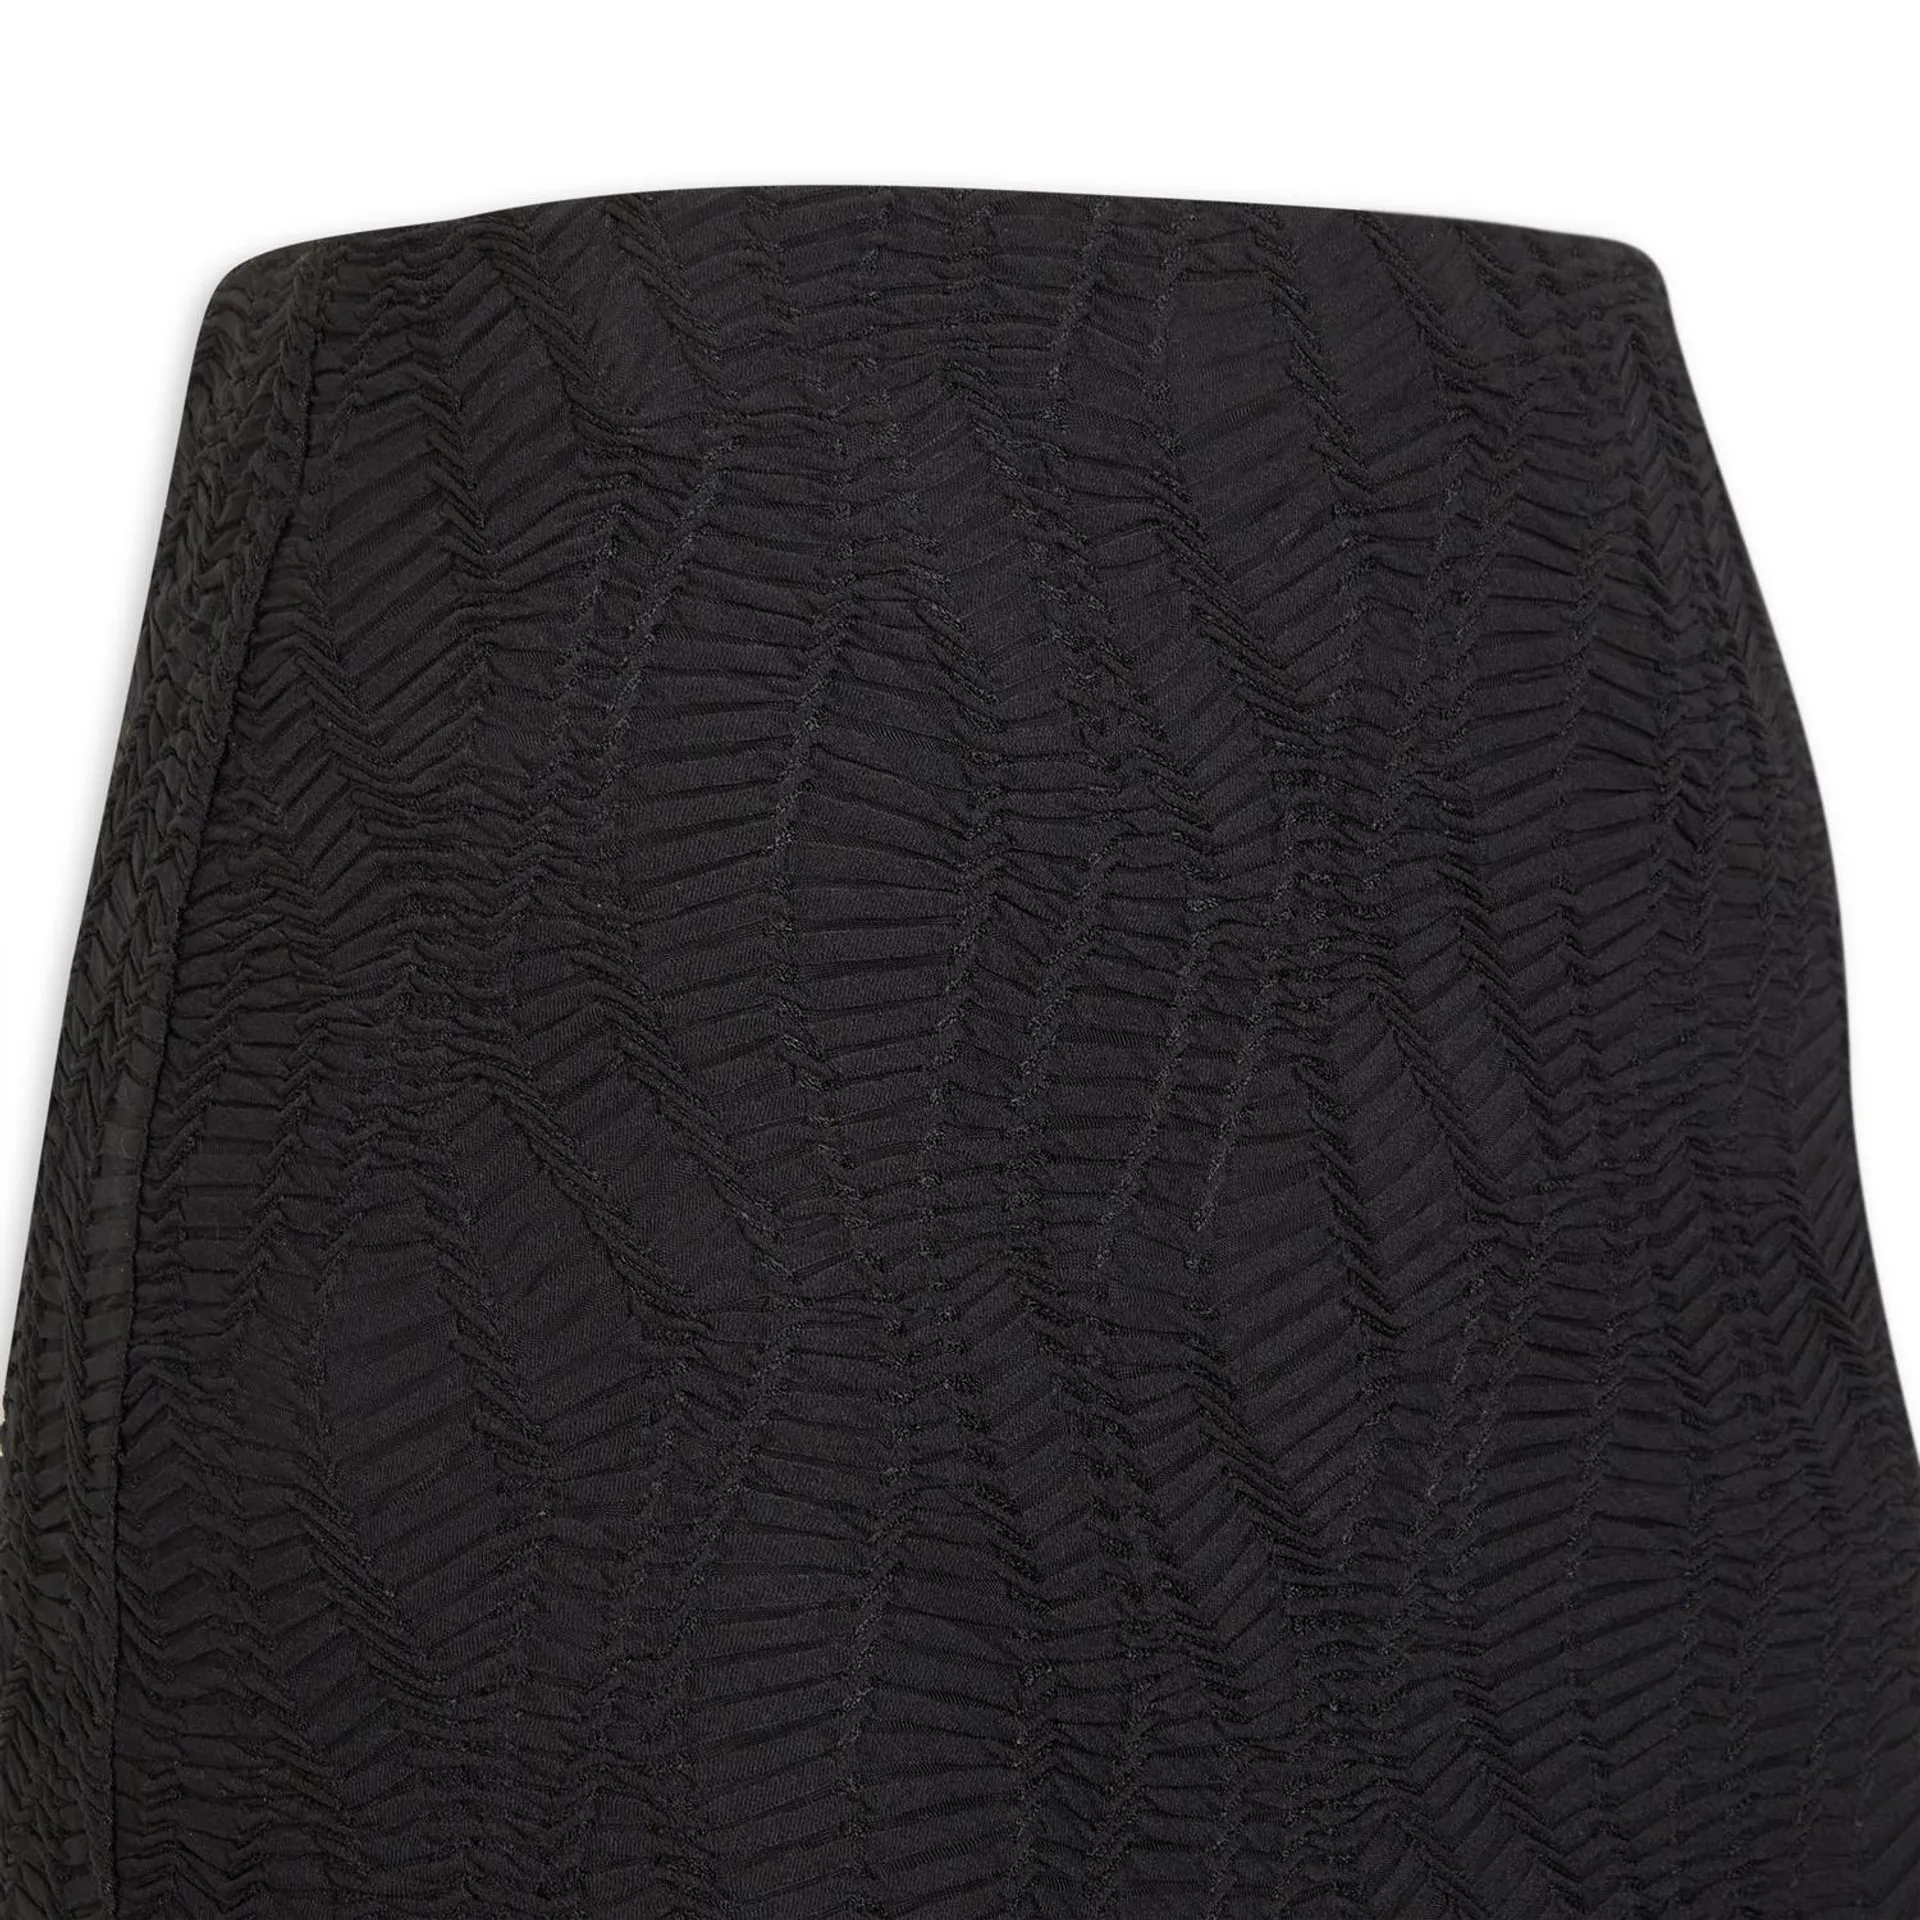 Texture Black Skirt